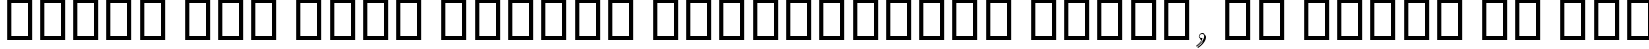 Пример написания шрифтом B Niki Shadow Italic текста на русском